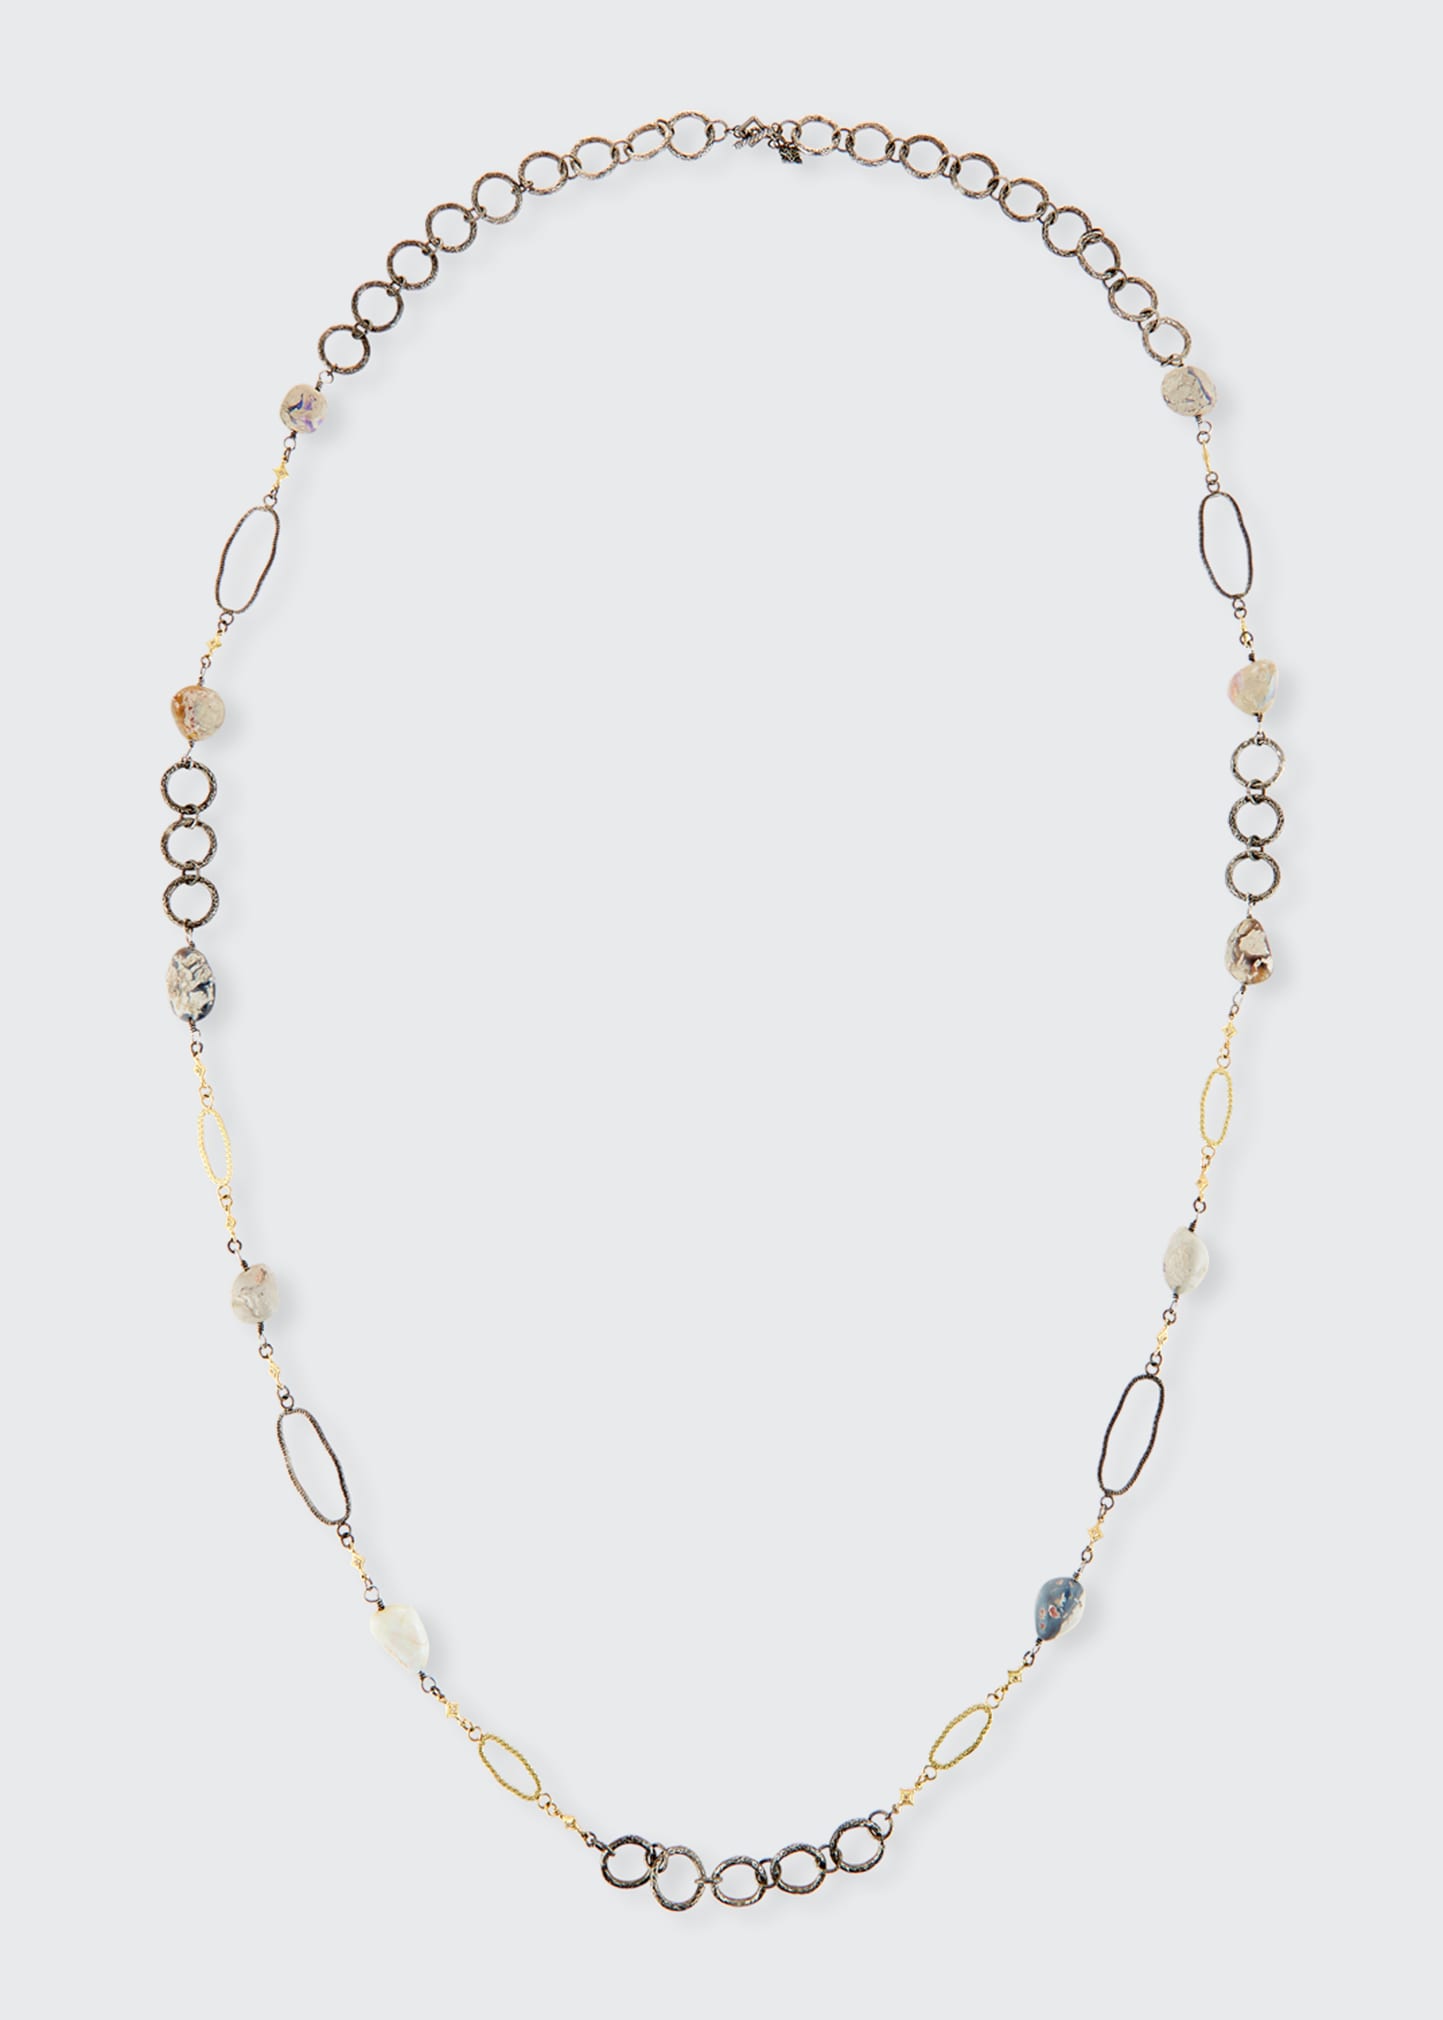 Armenta Old World Boulder Opal & Diamond Crivelli Necklace, 40"